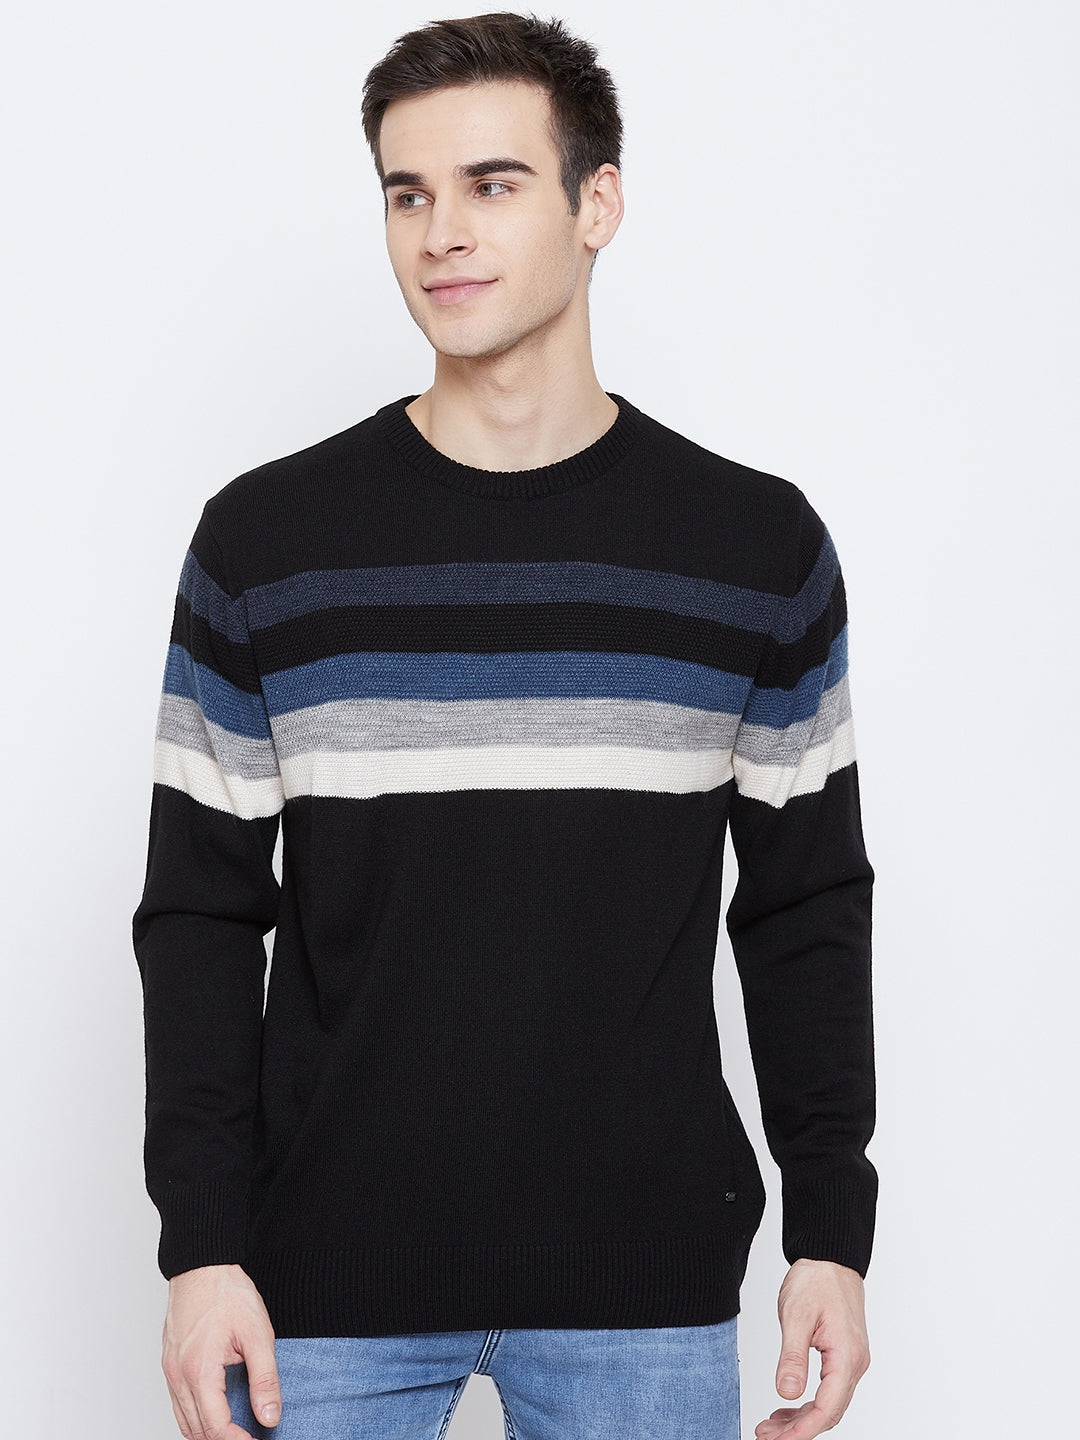 Black Colorblocked Round Neck Sweater - Men Sweaters